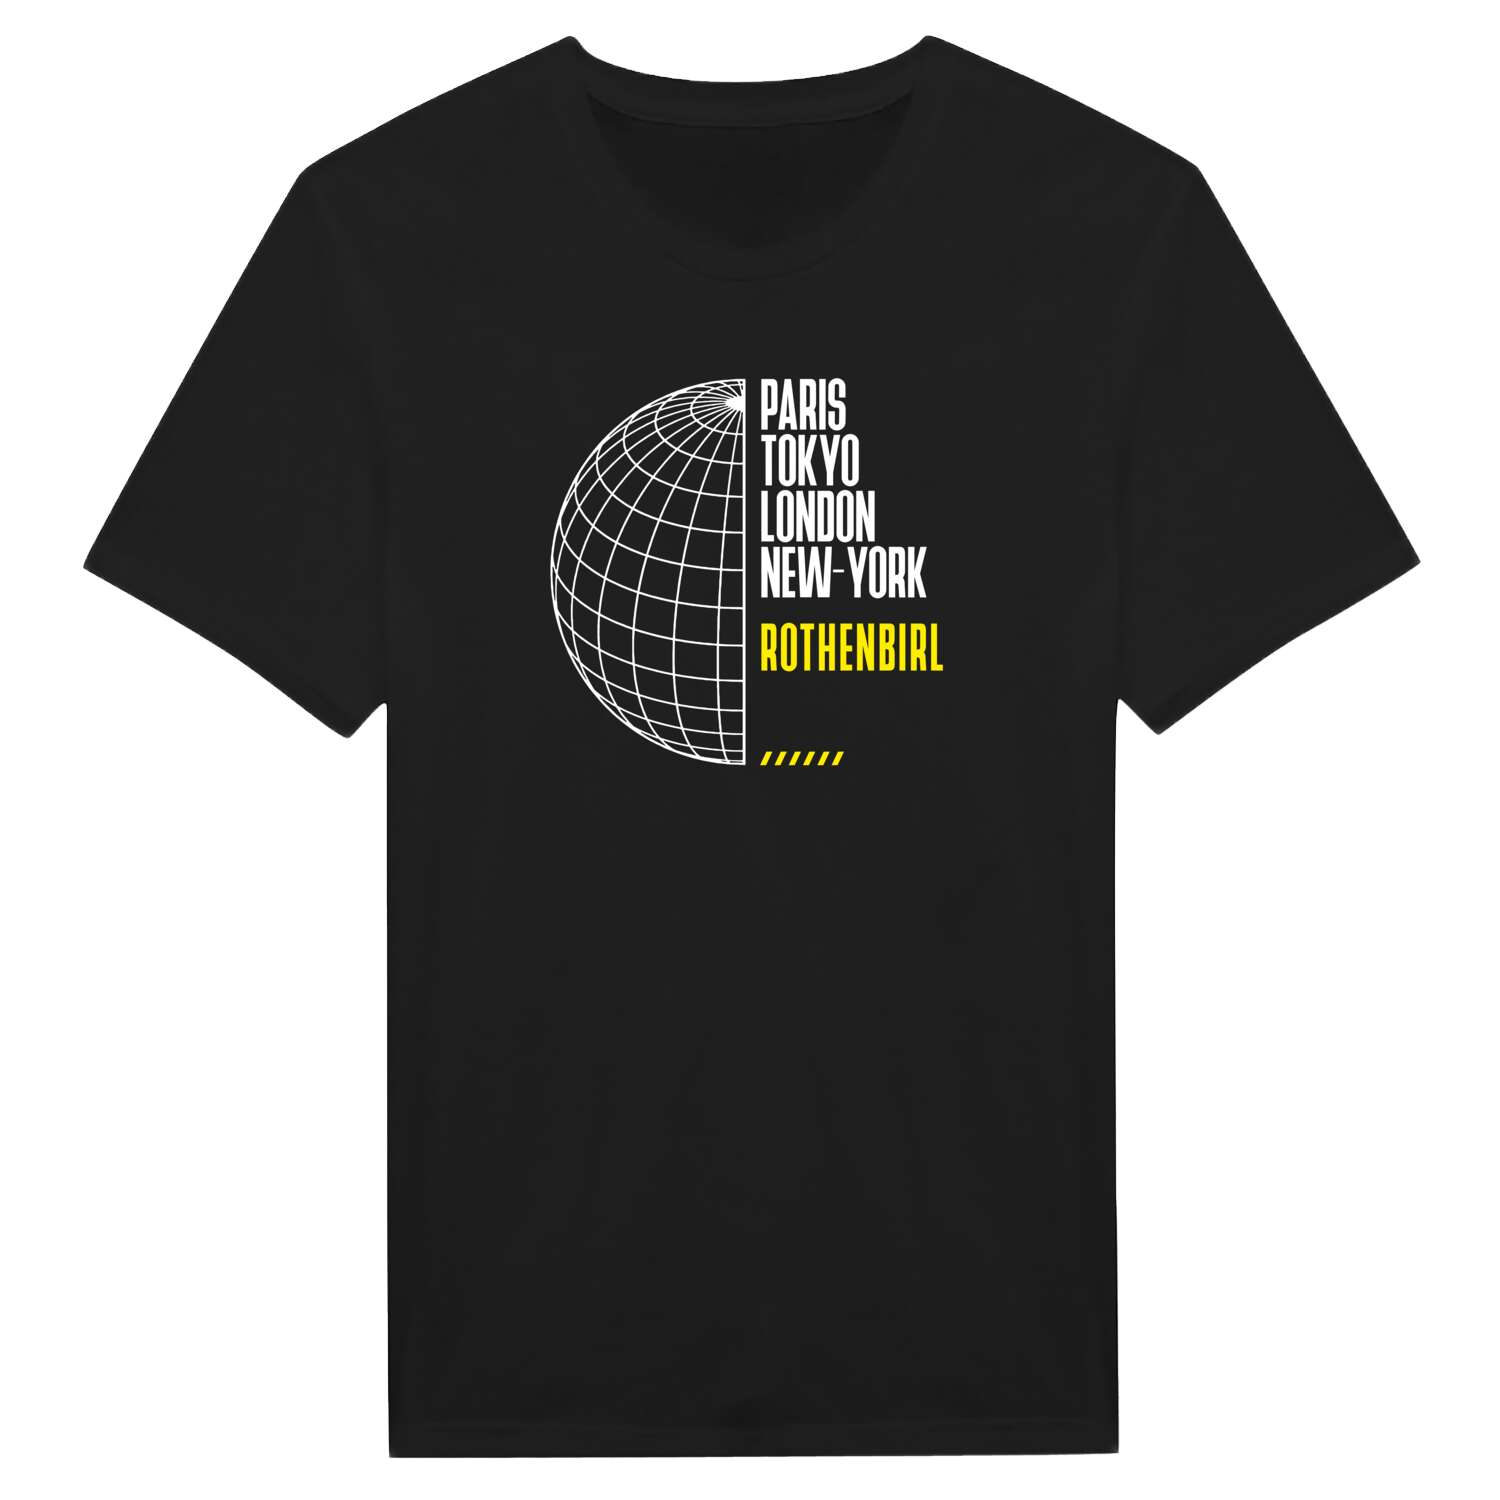 Rothenbirl T-Shirt »Paris Tokyo London«